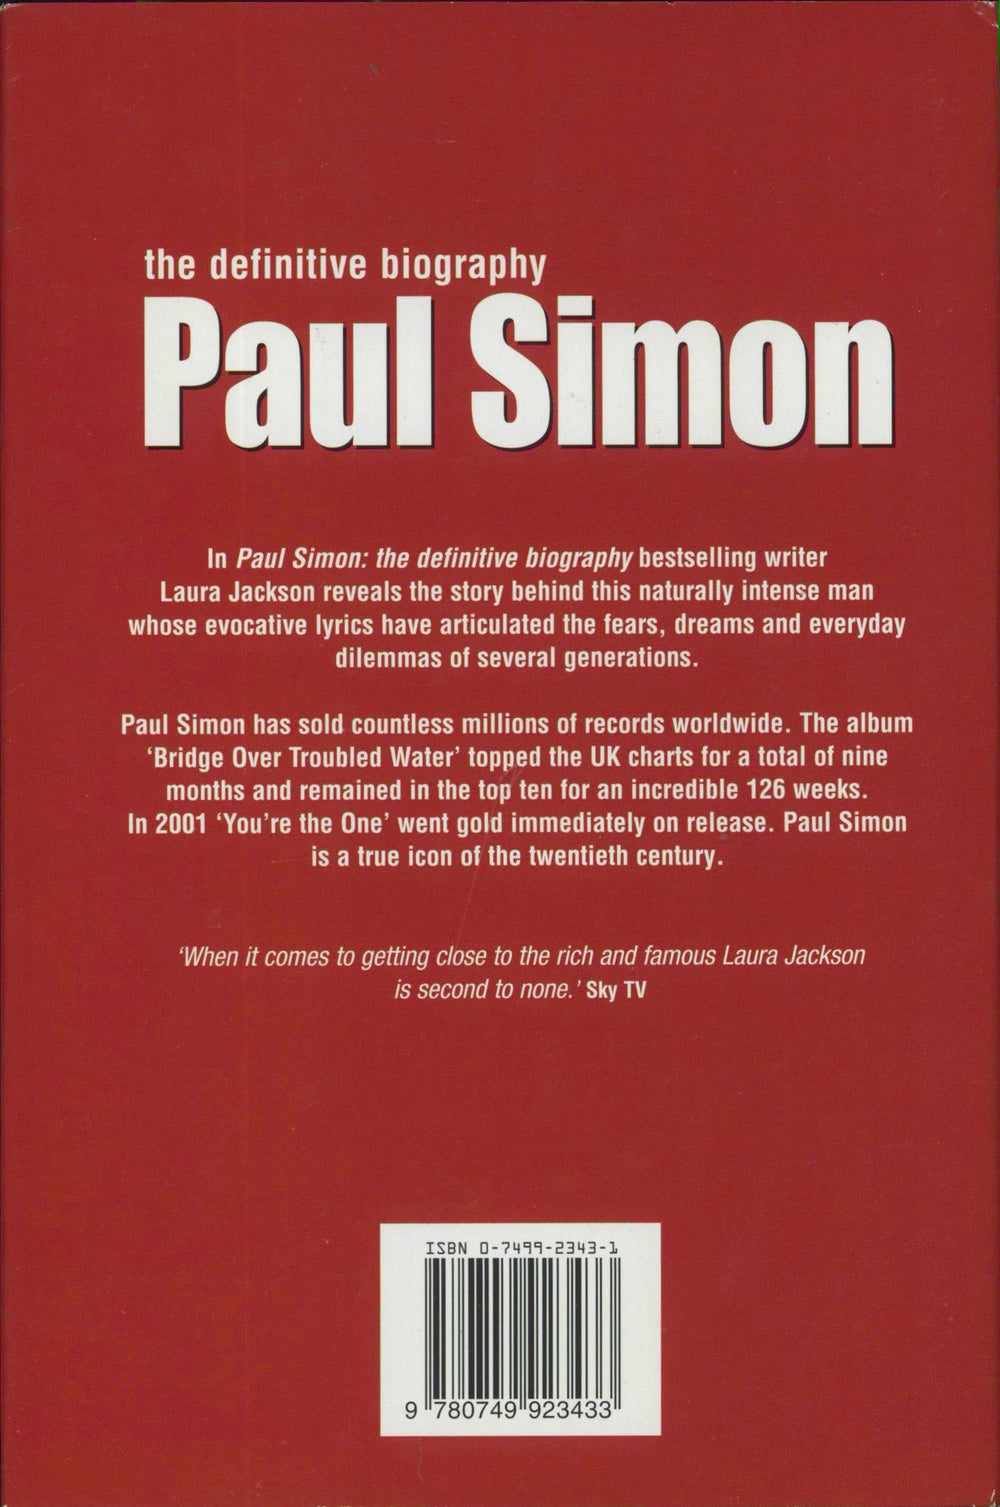 Paul Simon Paul Simon: The Definitive Biography - Hardcover UK book 9780749923433